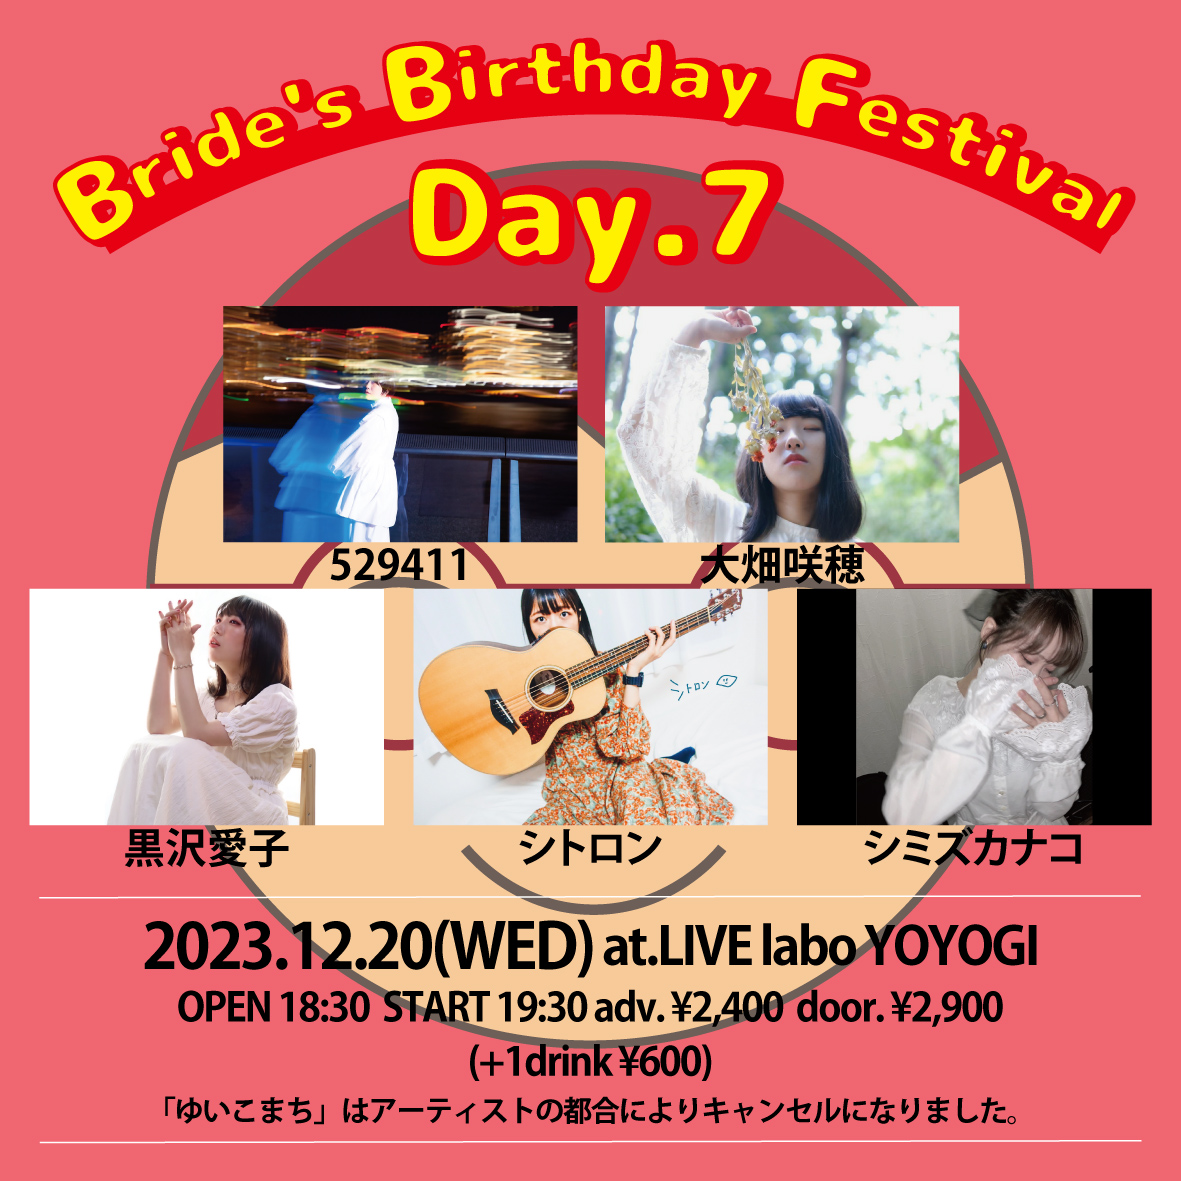 Bride's Birthday Festival 2023 Day7